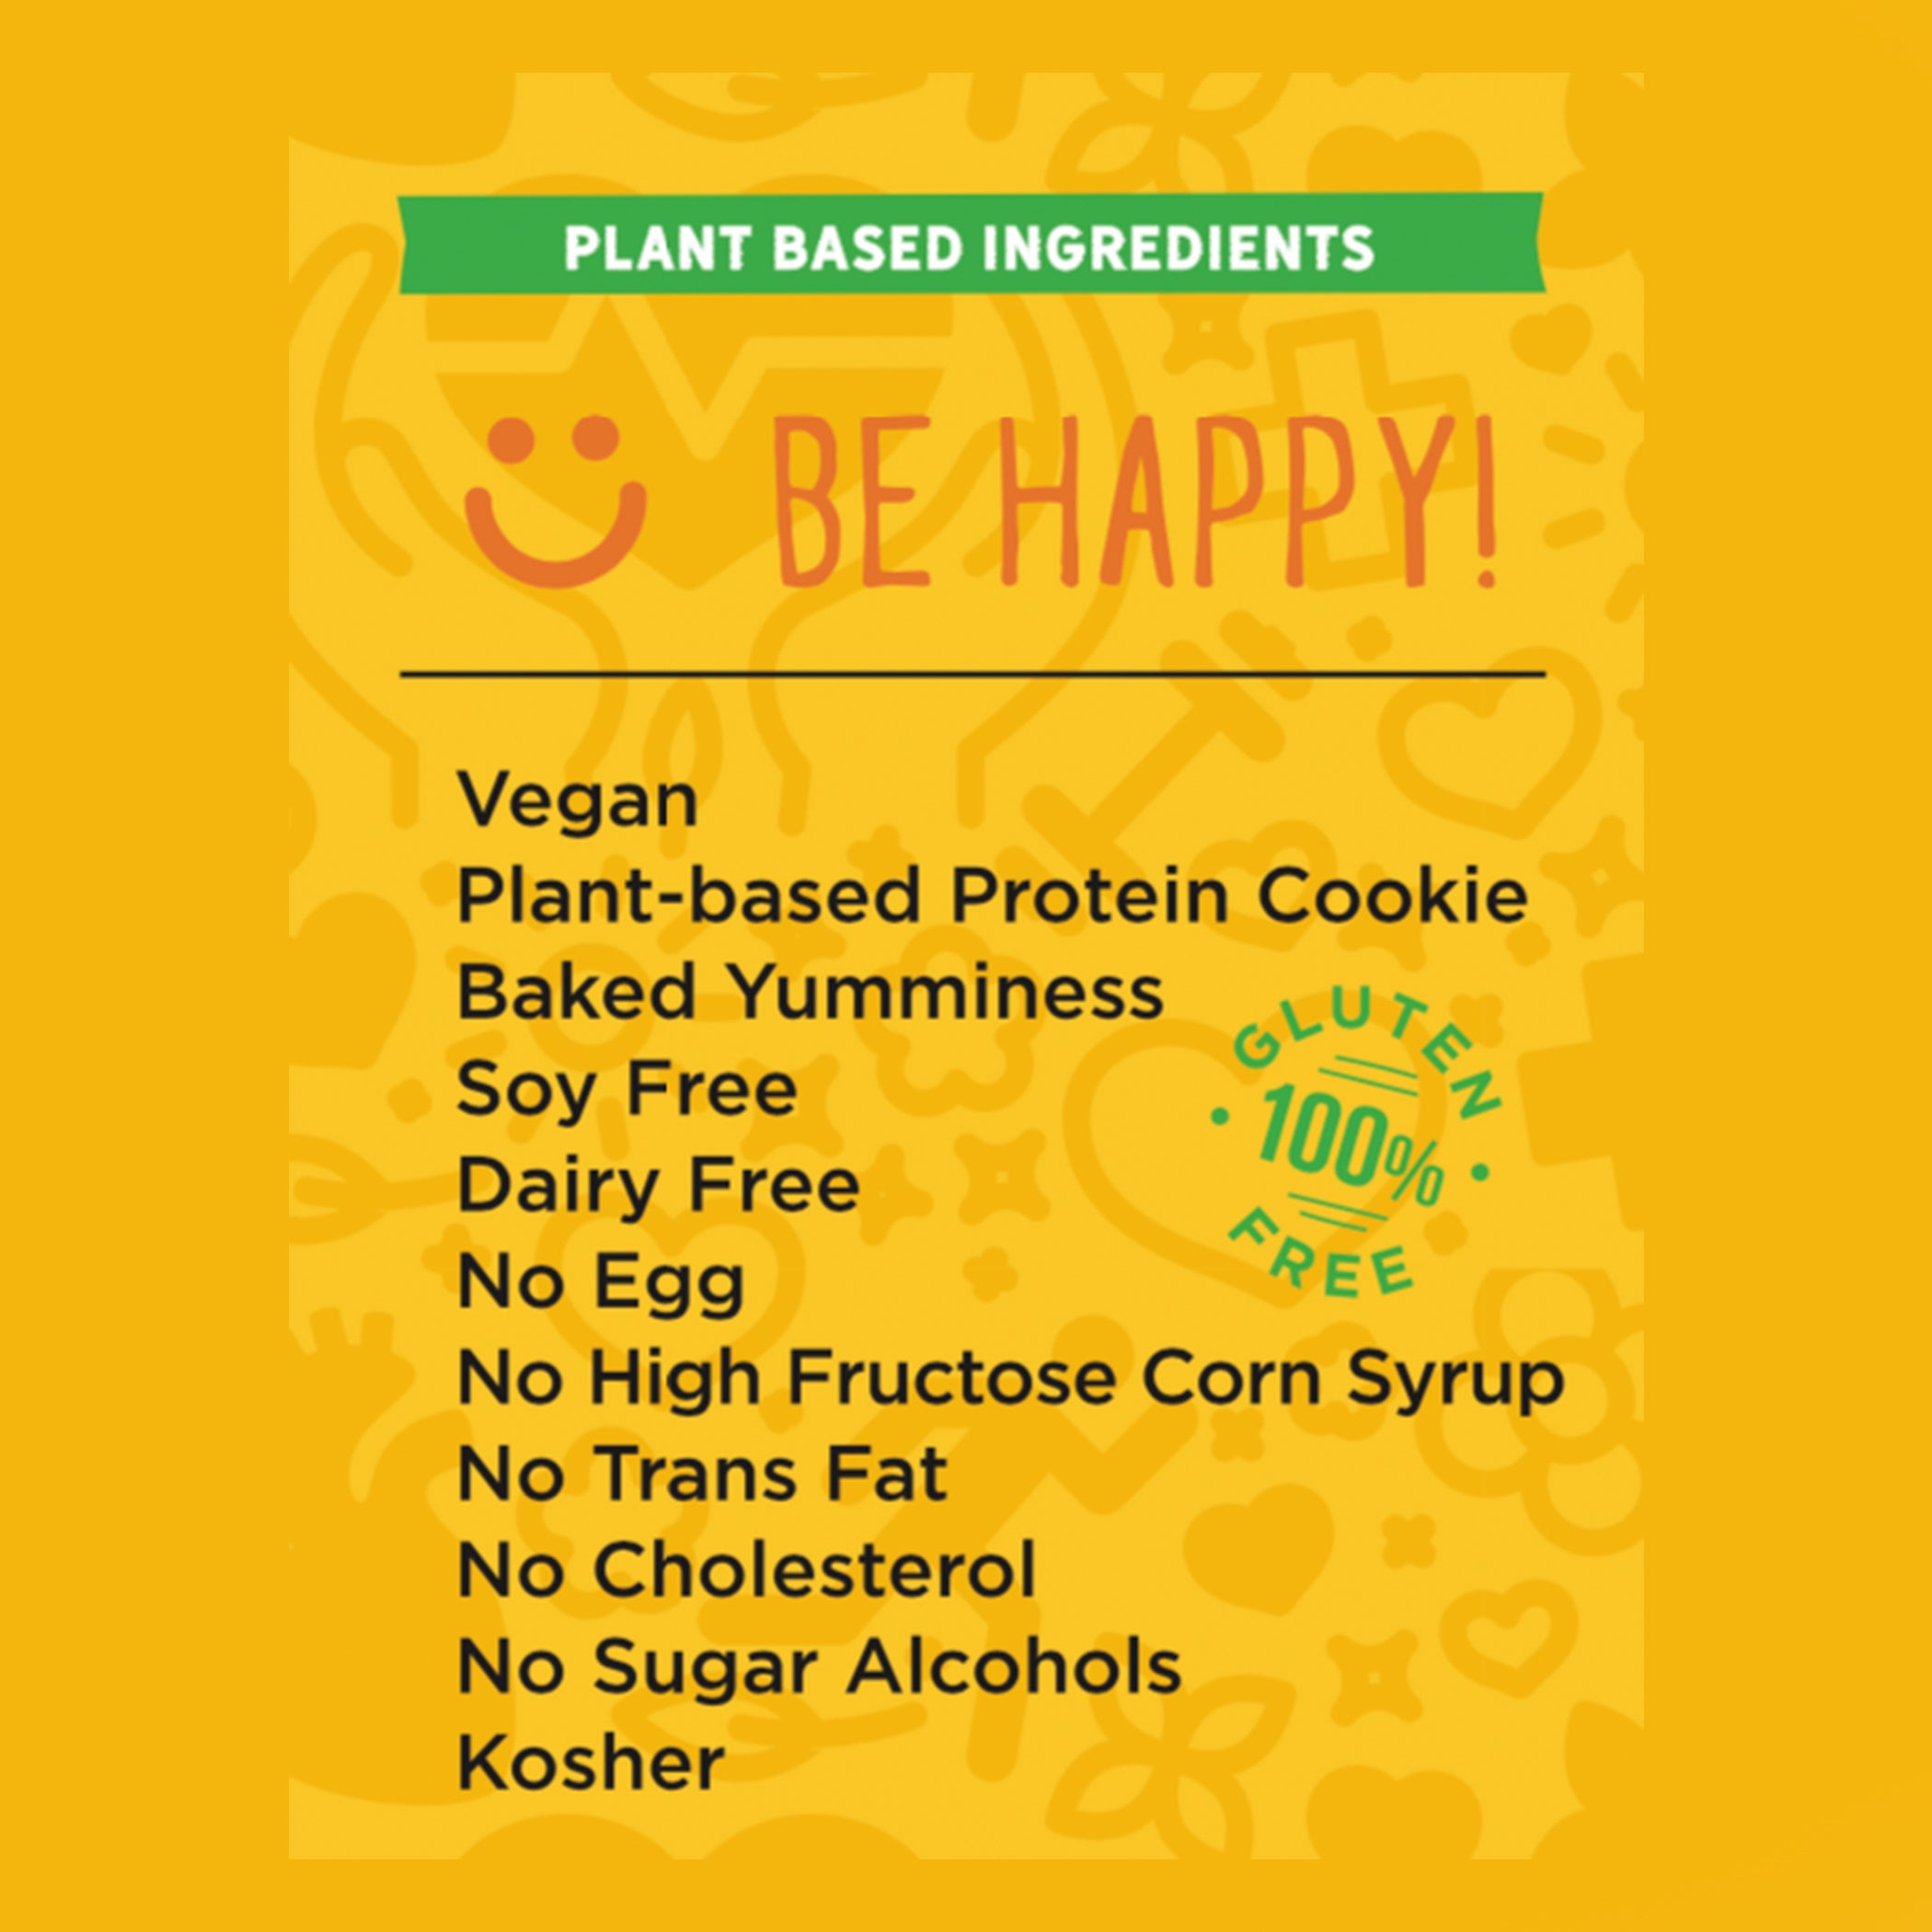 Oatmeal & Raisin  Happy Cookie® 12-Pack